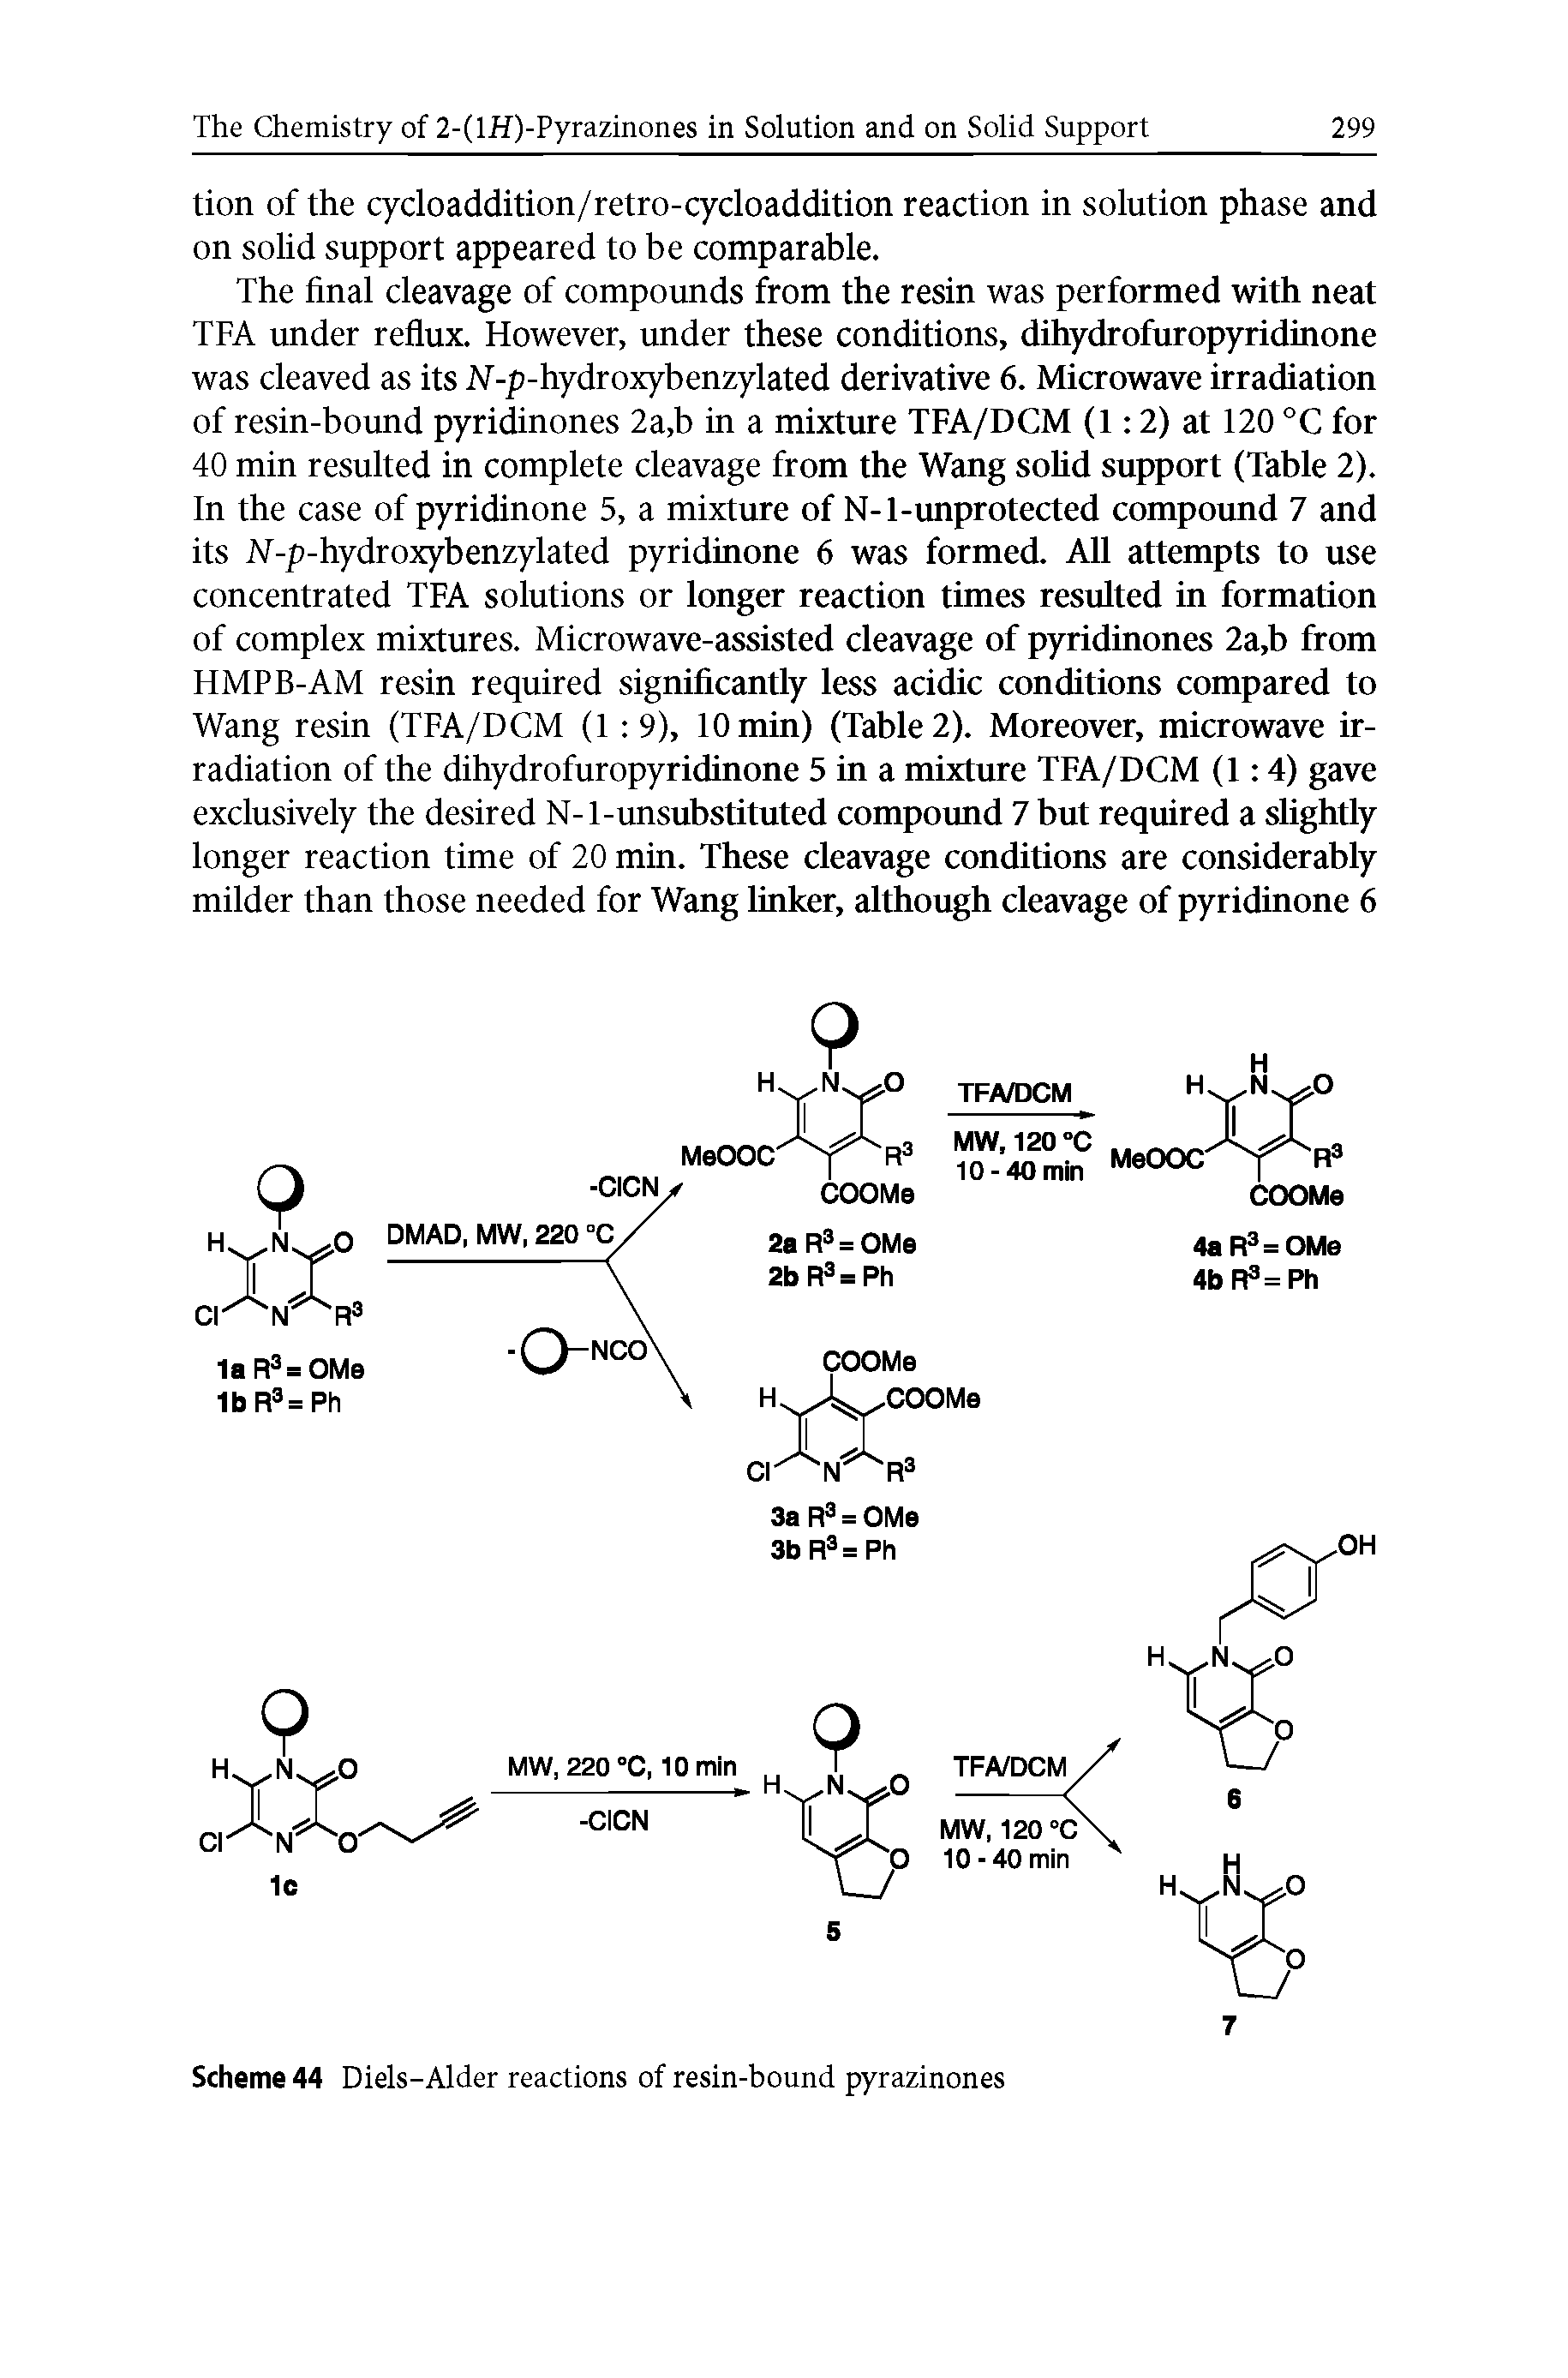 Scheme 44 Diels-Alder reactions of resin-bound pyrazinones...